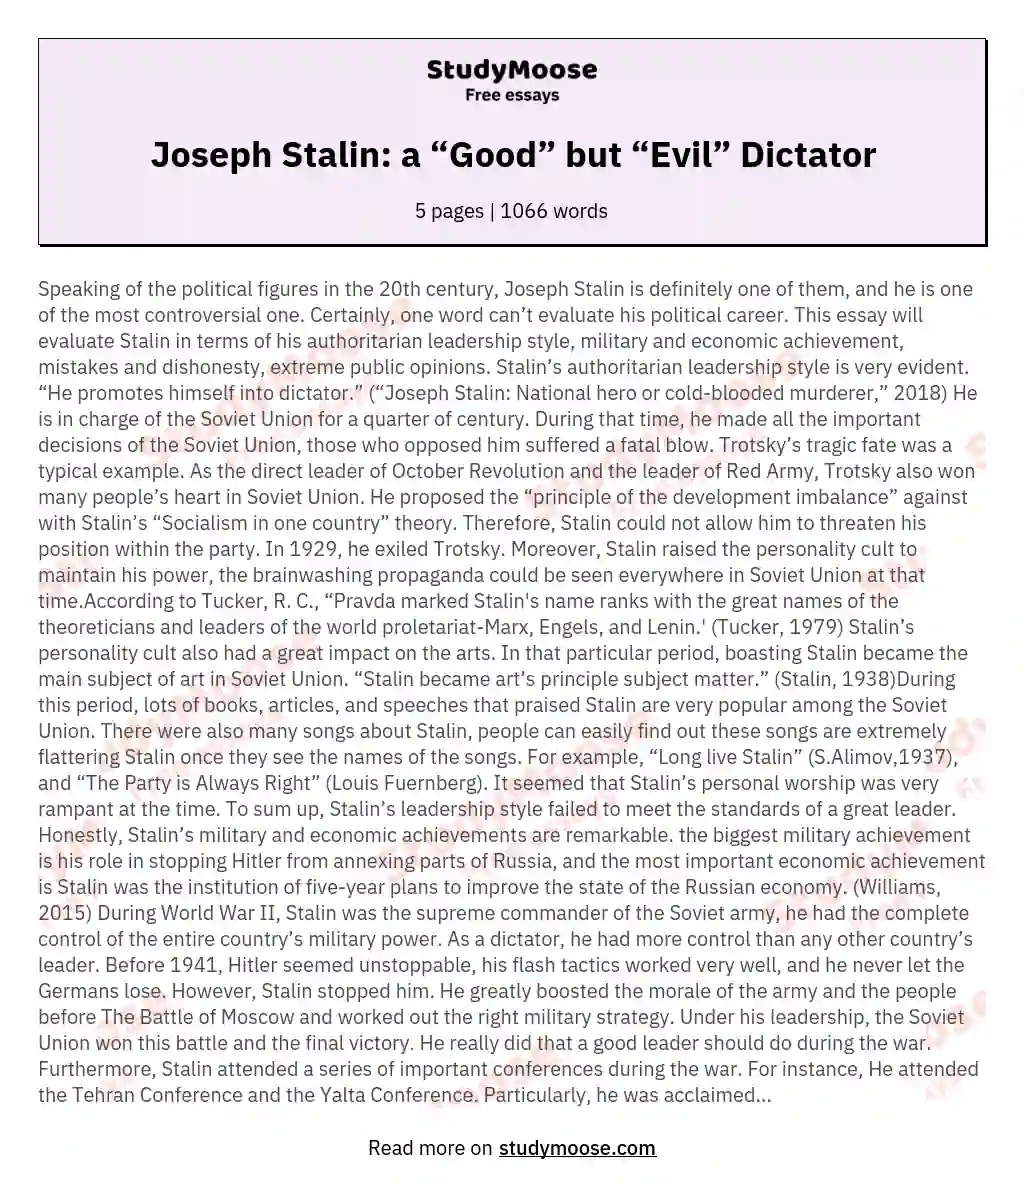 Joseph Stalin: a “Good” but “Evil” Dictator essay